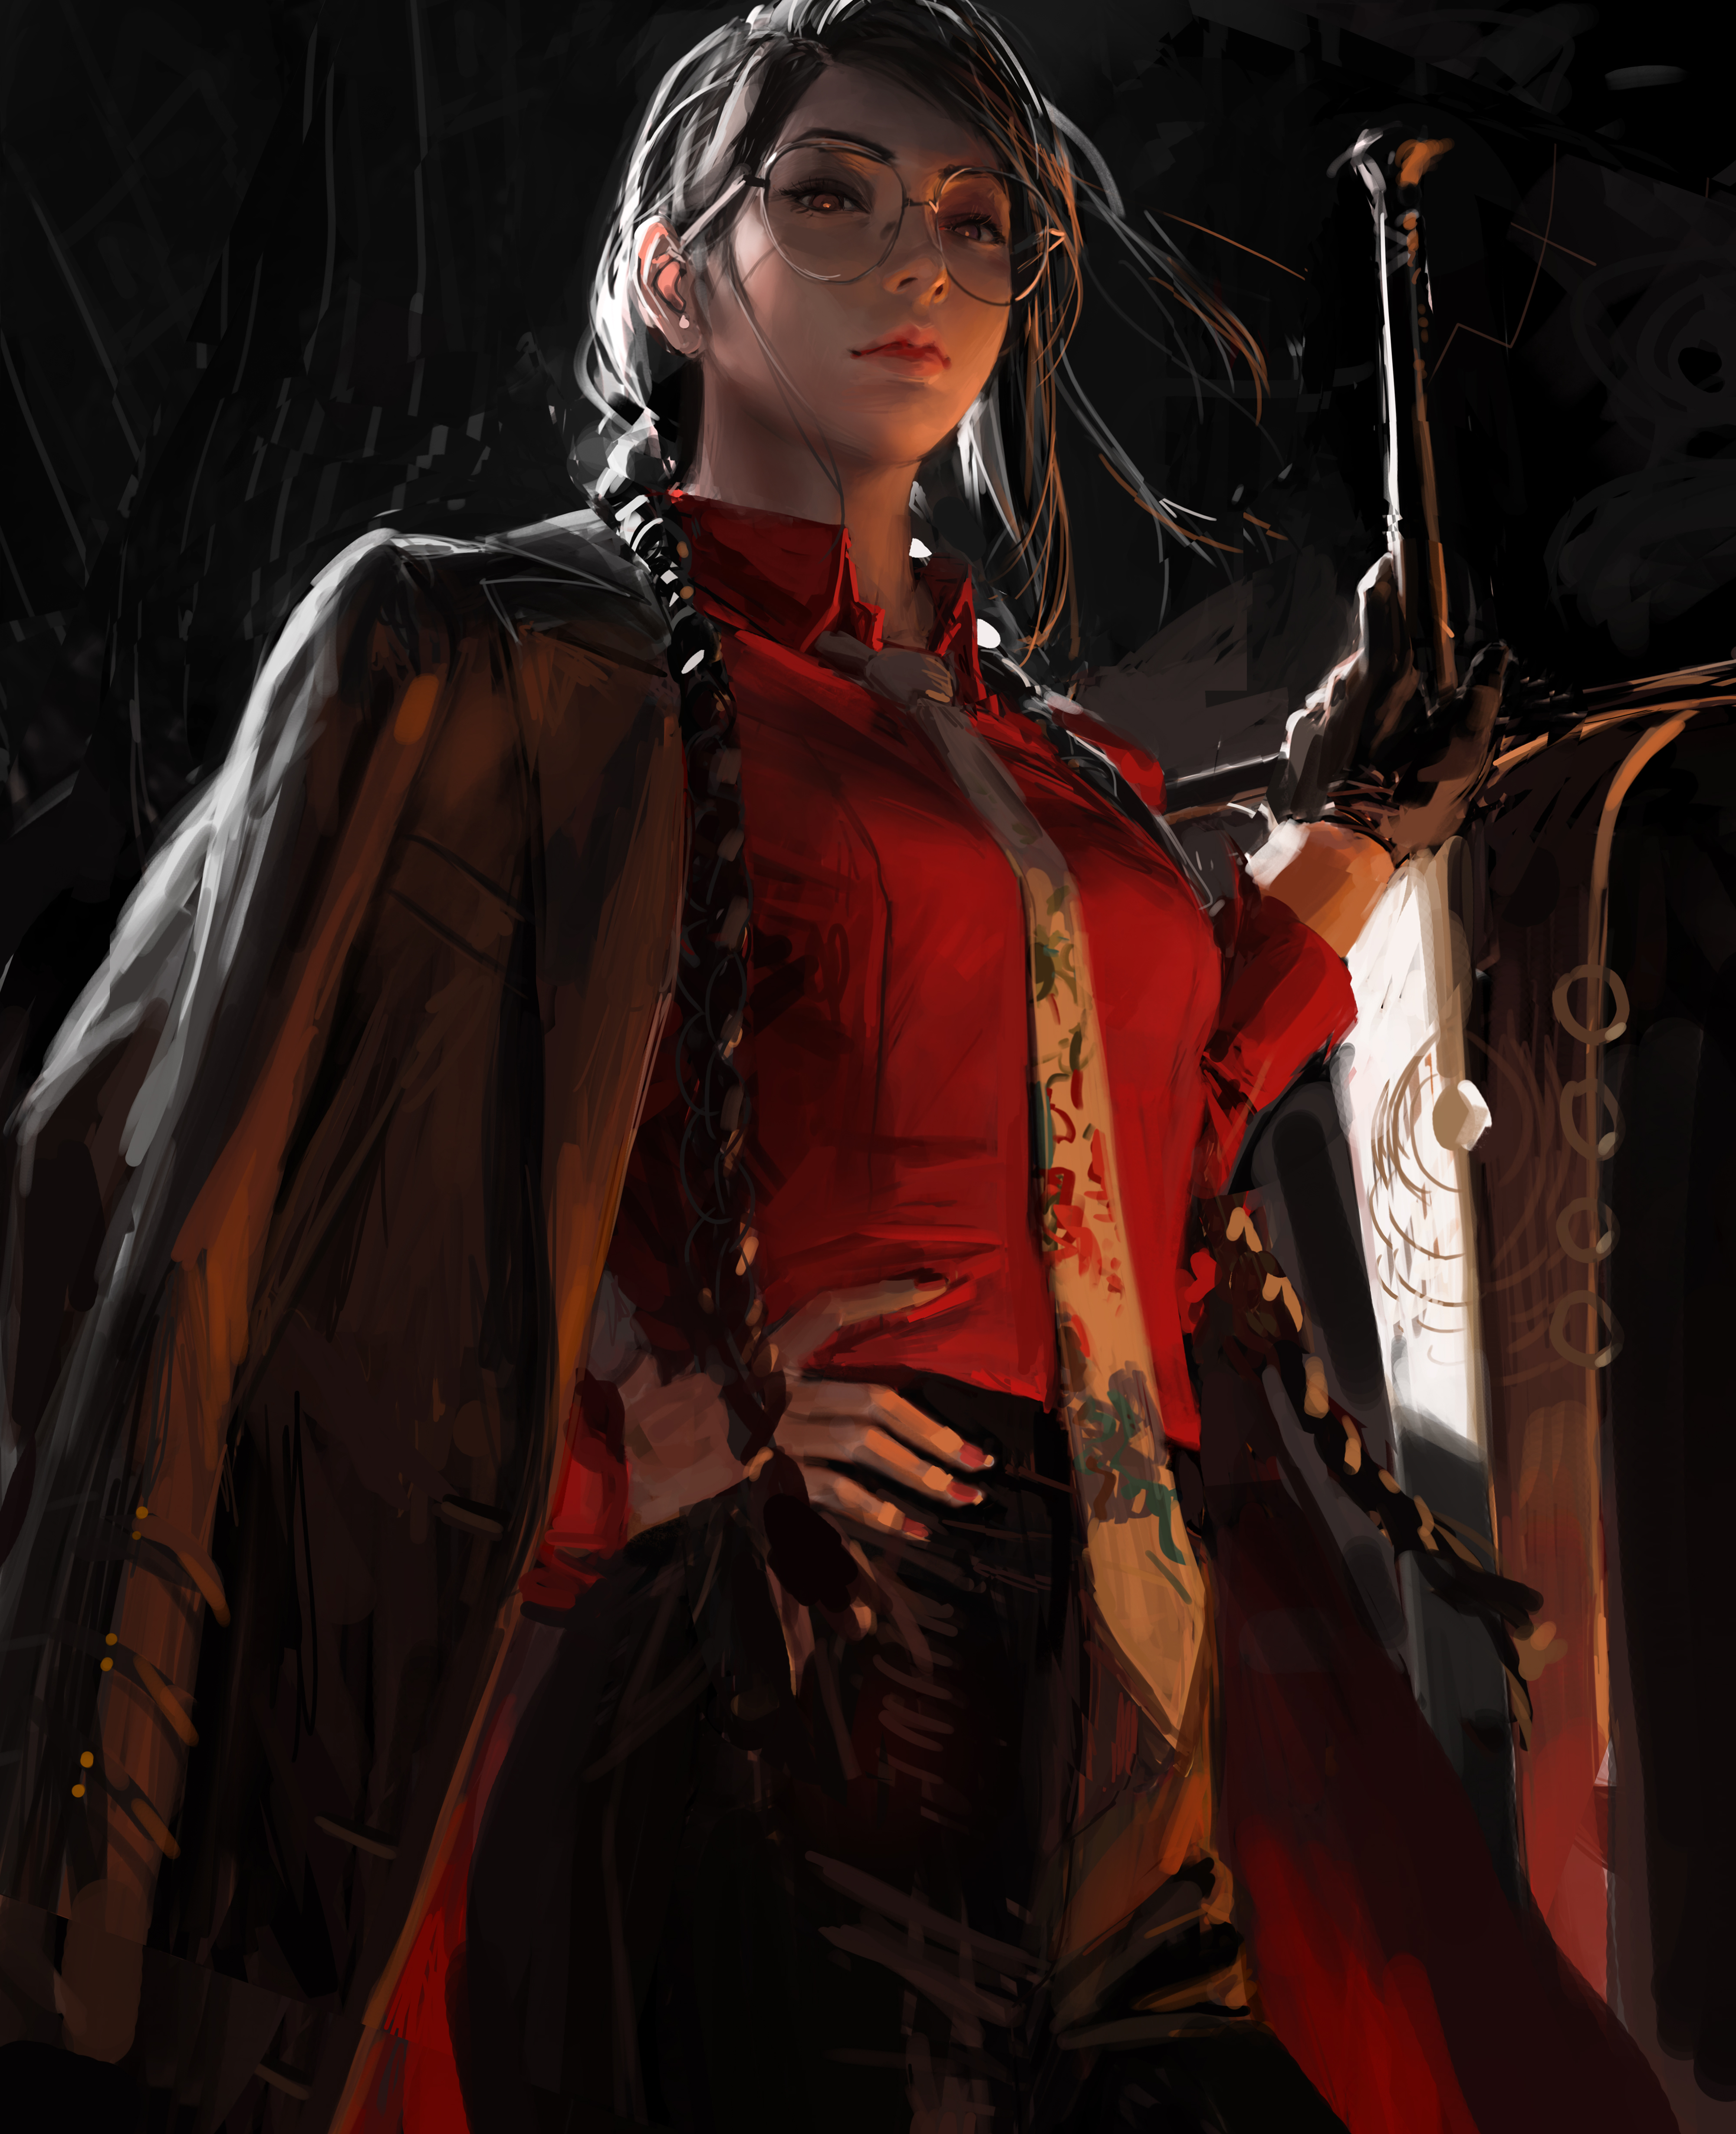 GUWEiZ Women Fantasy Girl Sword Braids Suits Artwork Original Characters Drawing Digital Art Portrai 4000x4916